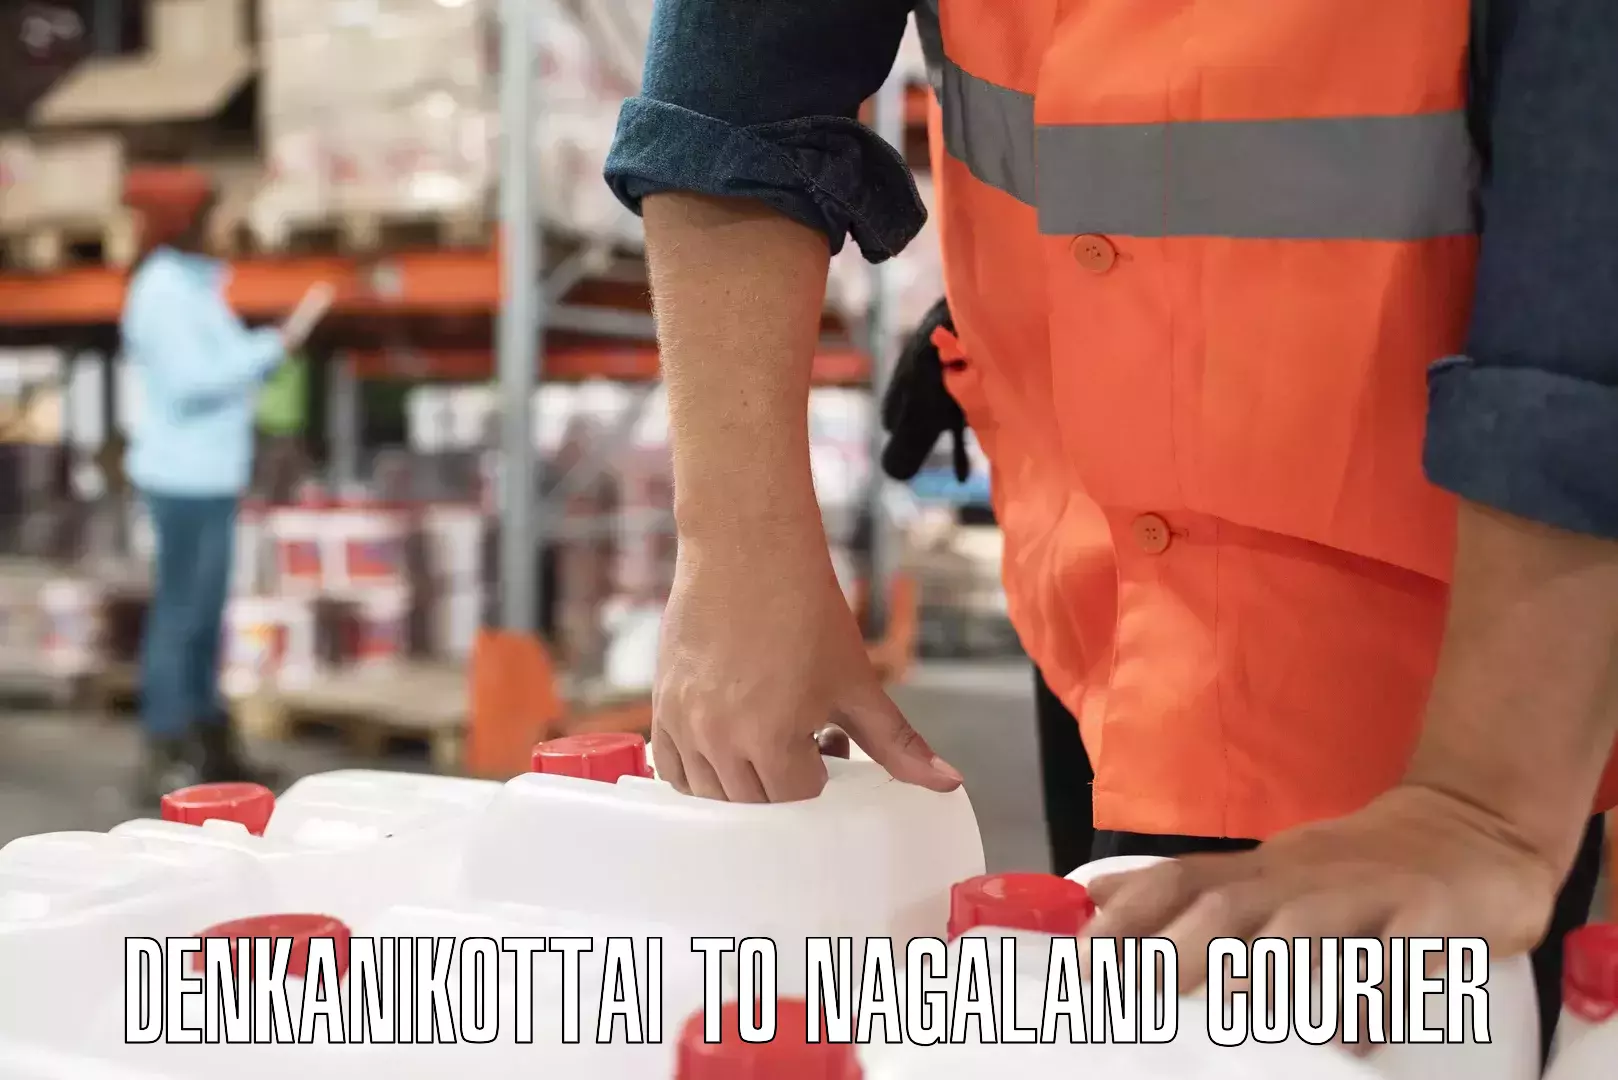 On-demand shipping options Denkanikottai to Nagaland